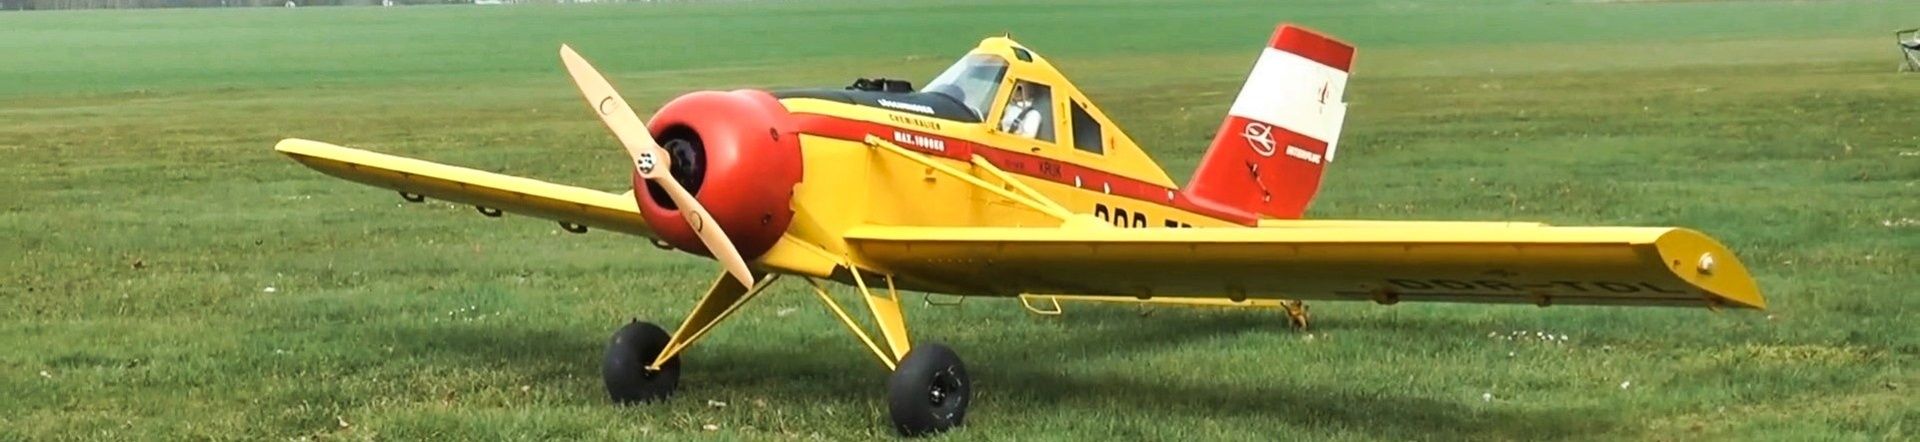 Modellflugzeug Agrarflieger Kruk PZL 106